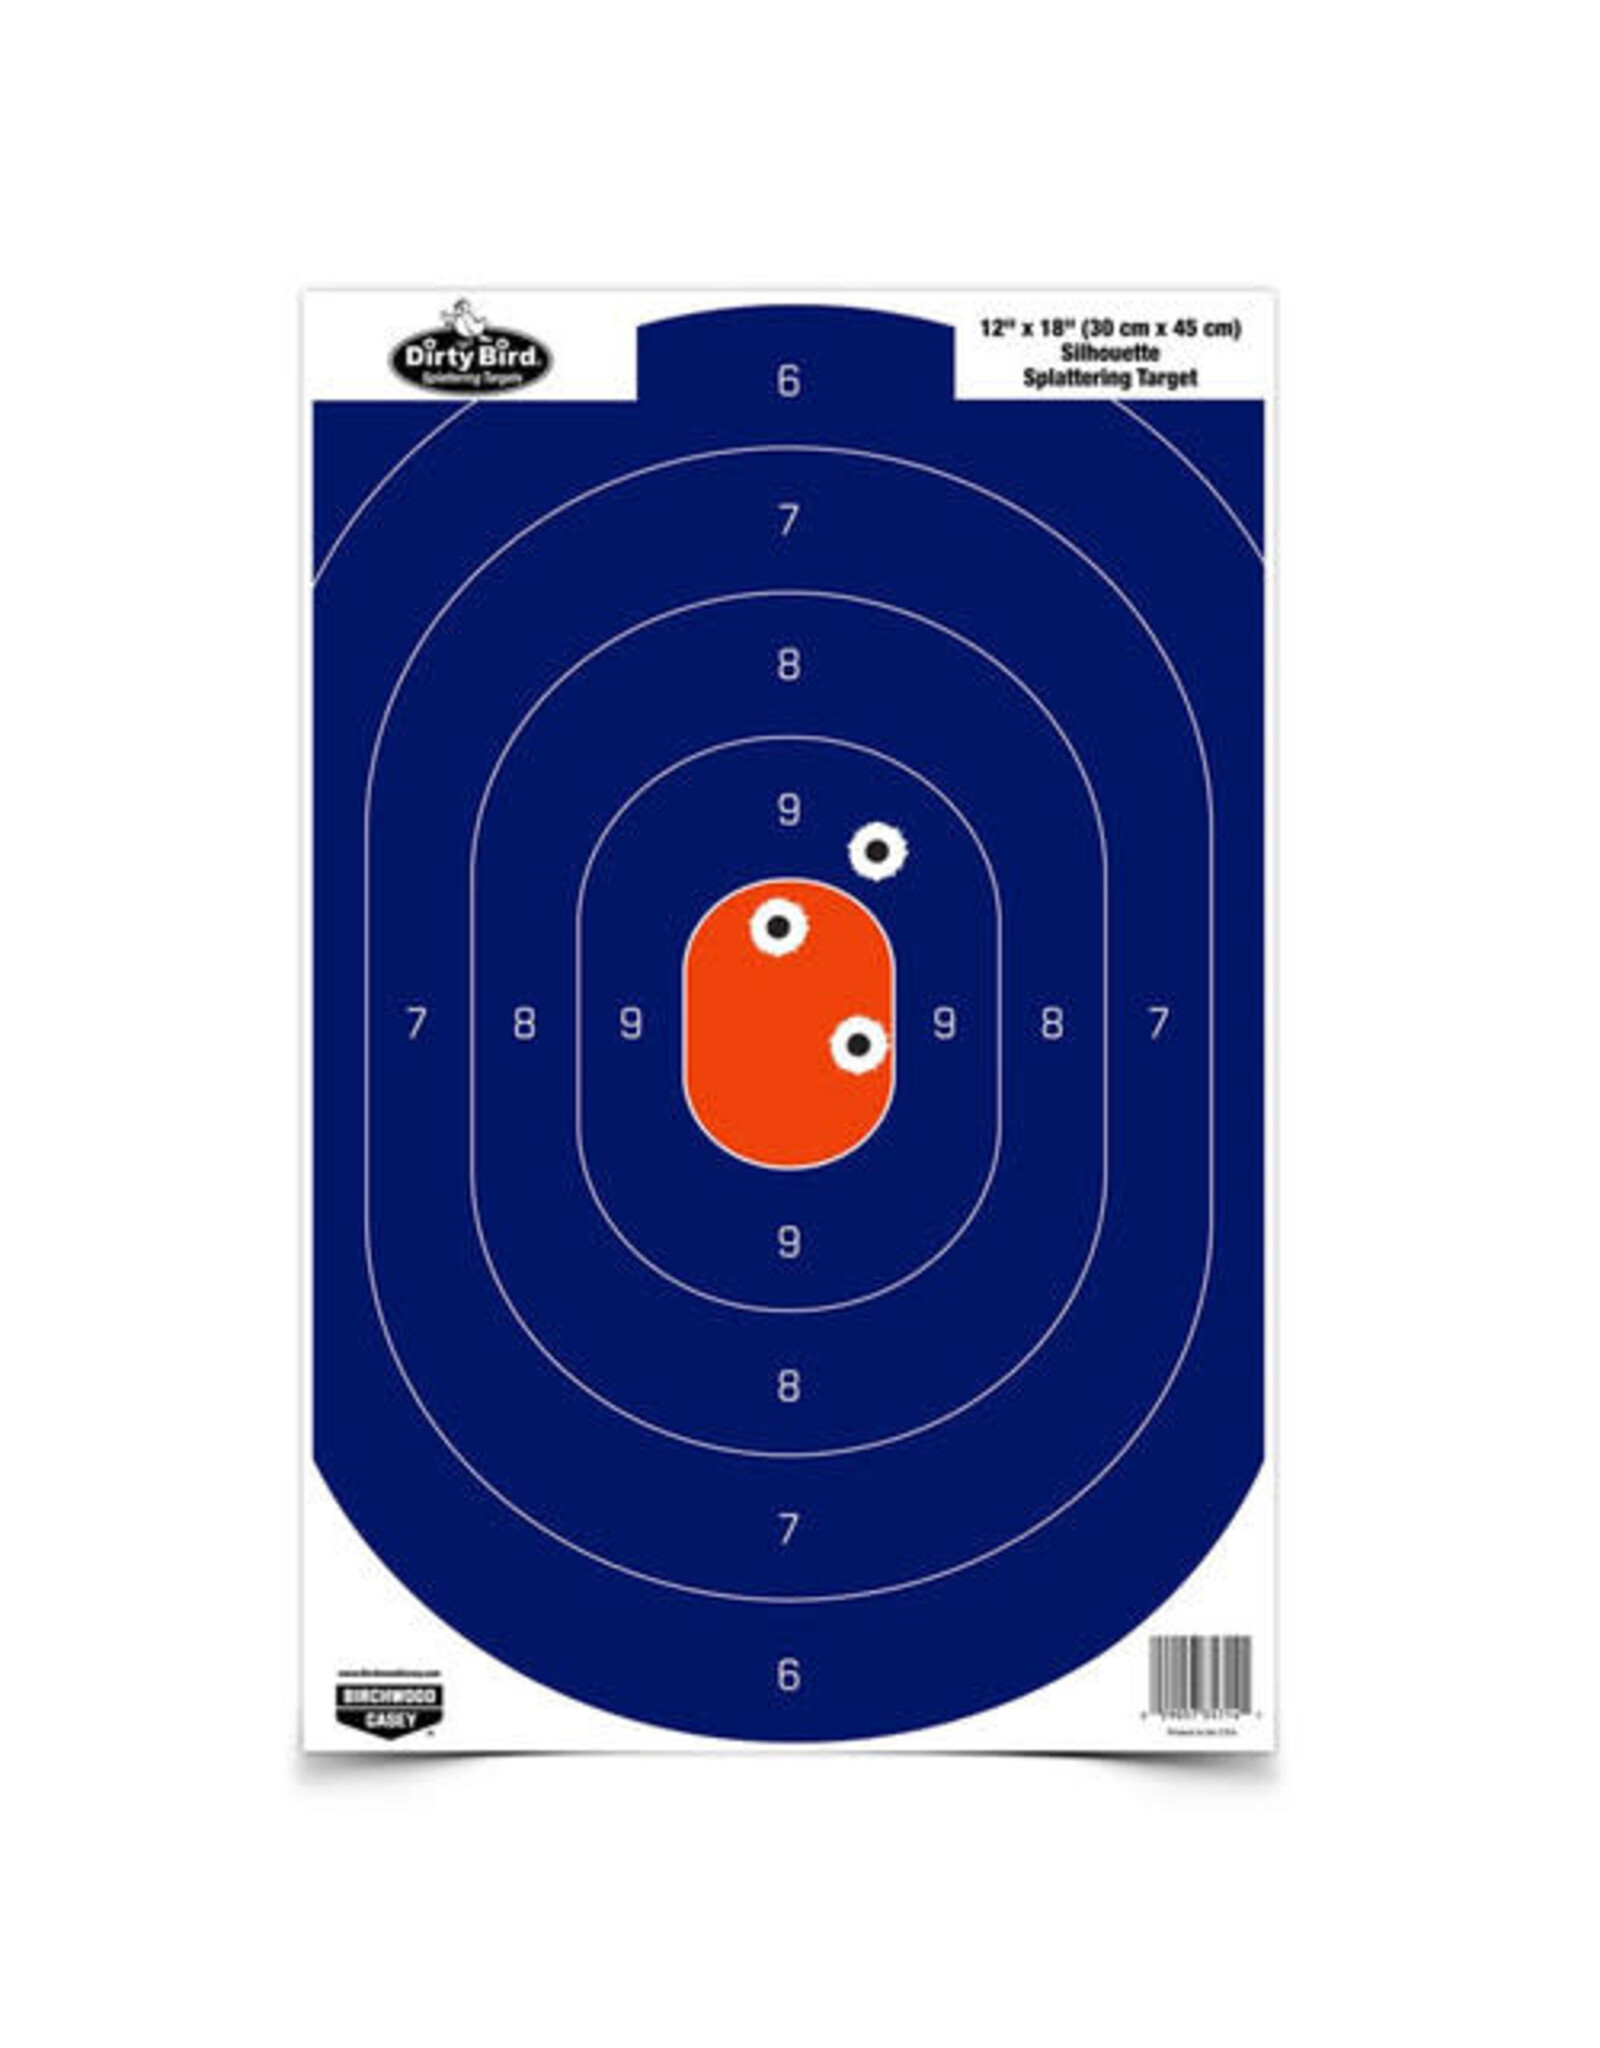 Birchwood Casey Dirty Bird® 12 x 18 Blue / Orange Silhouette Target, 8 Targets